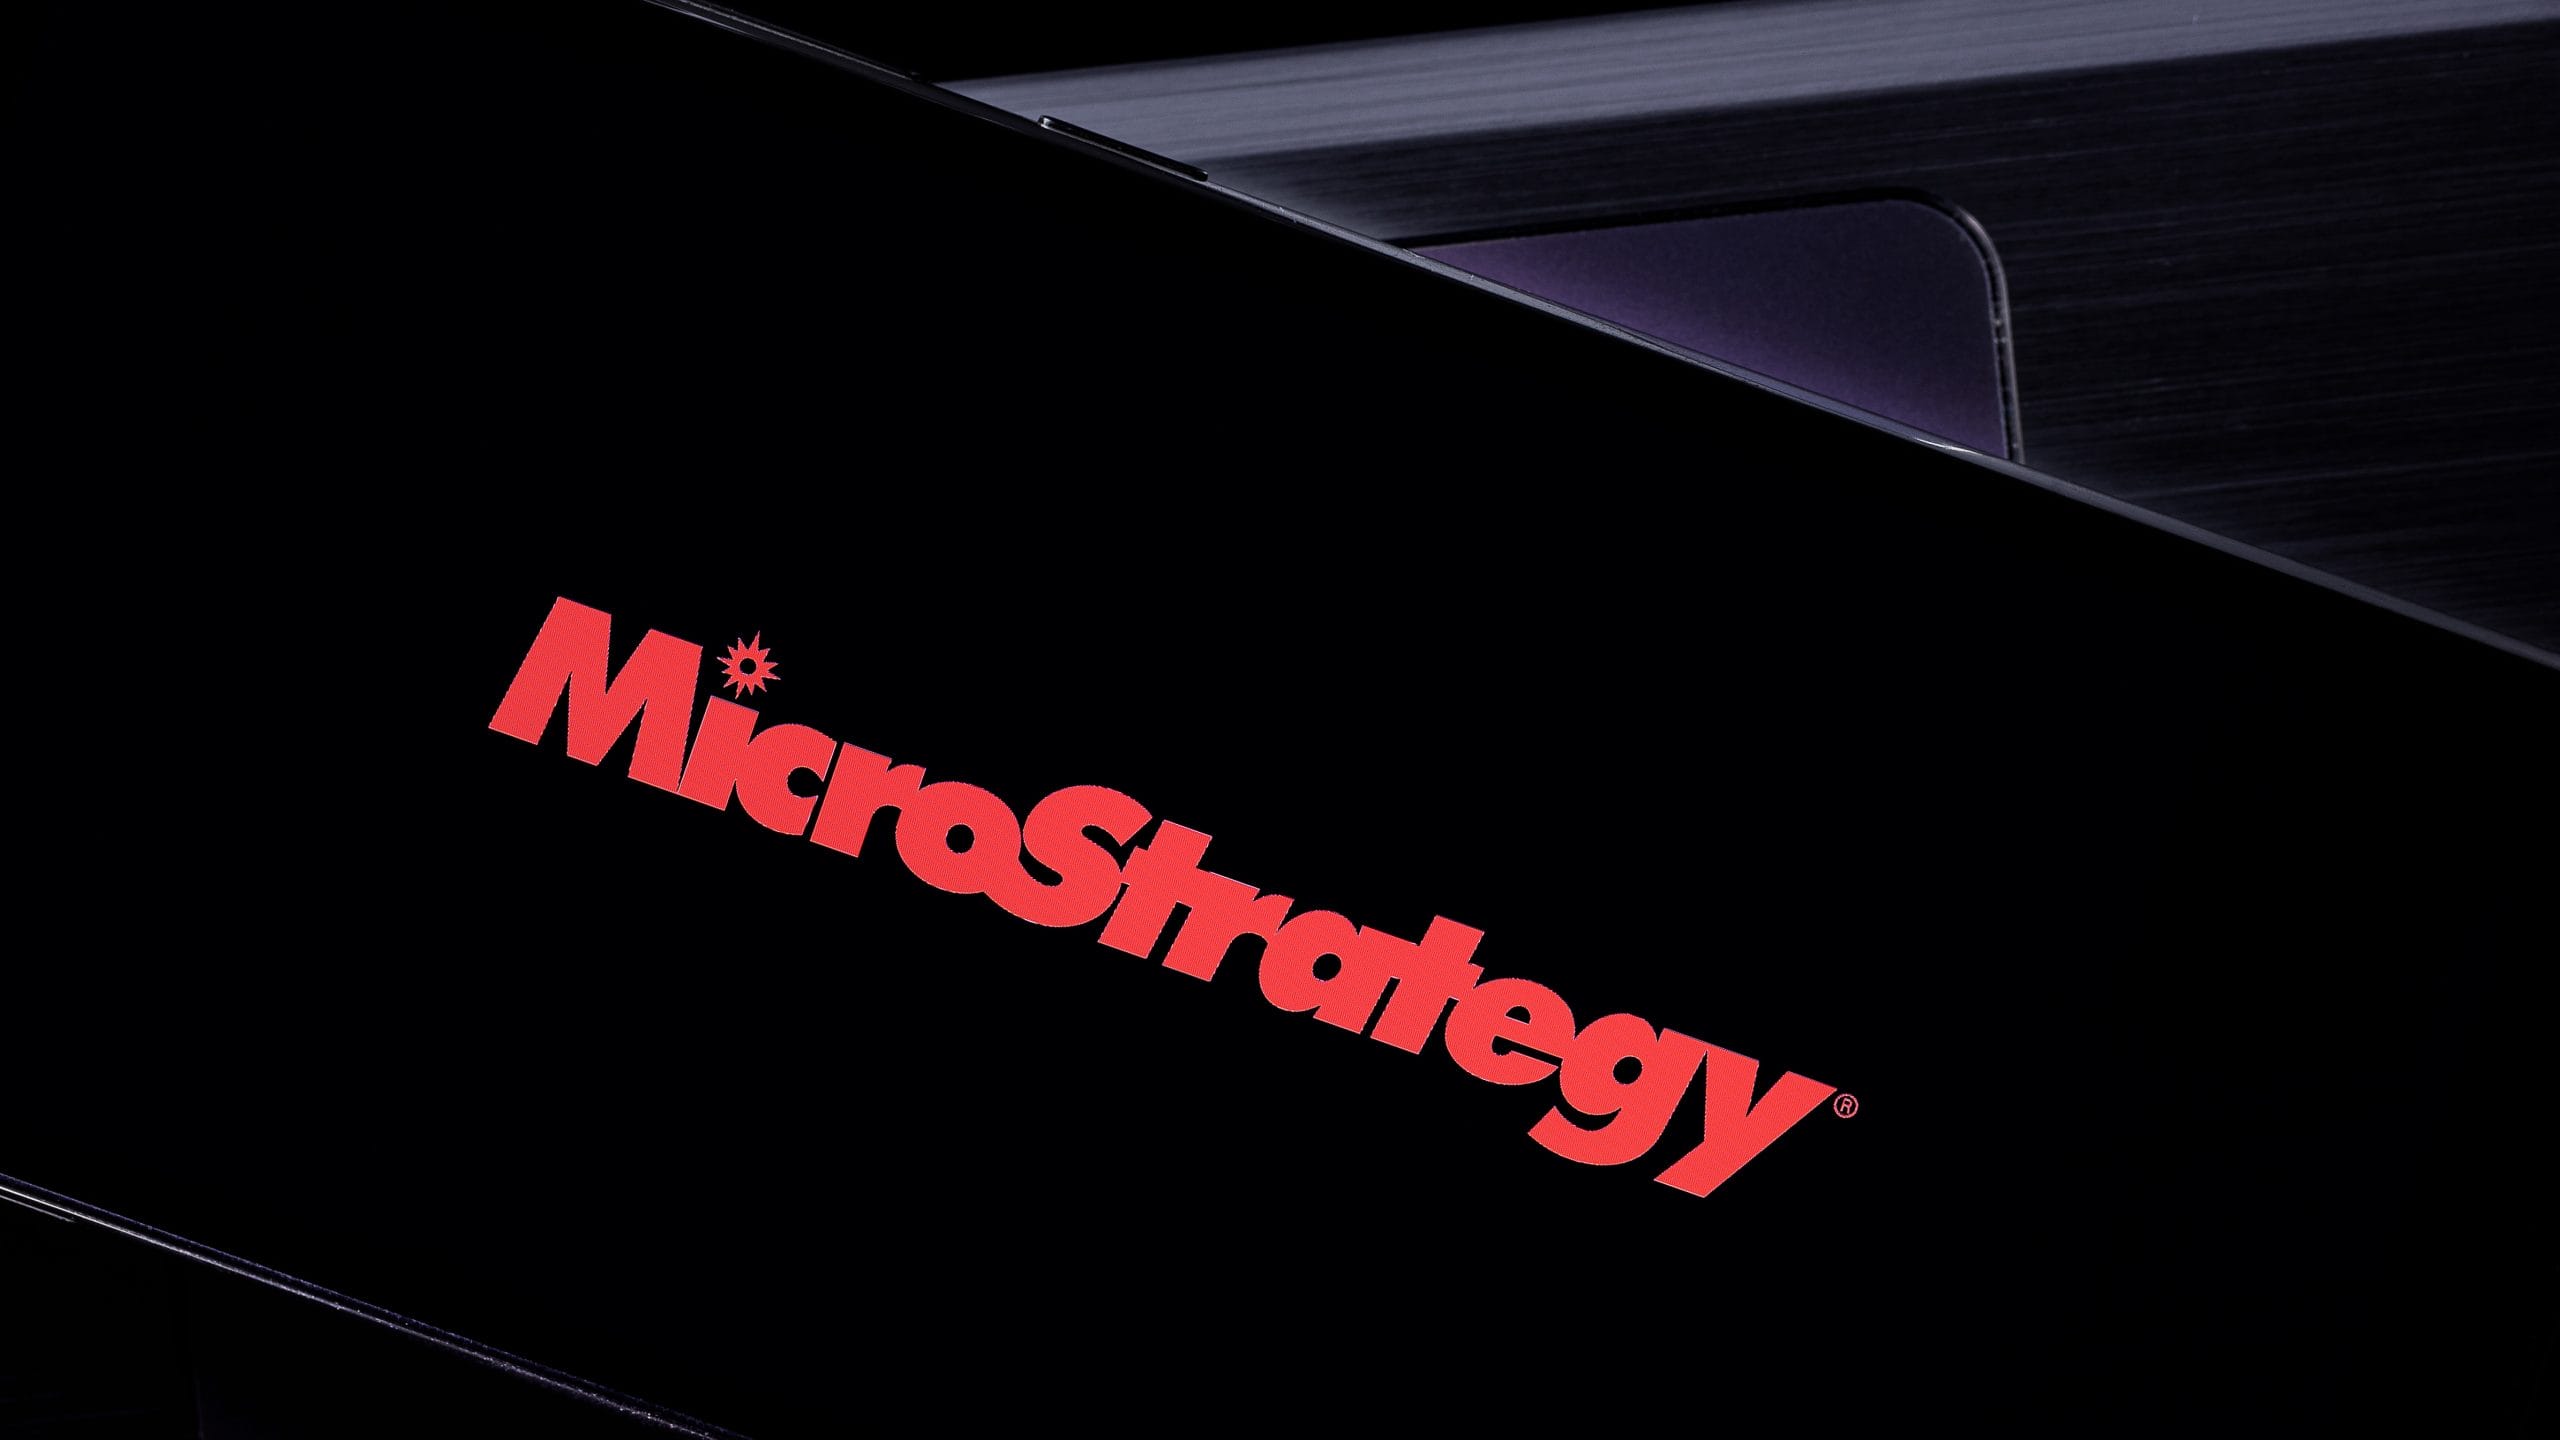 microstrategy company logo